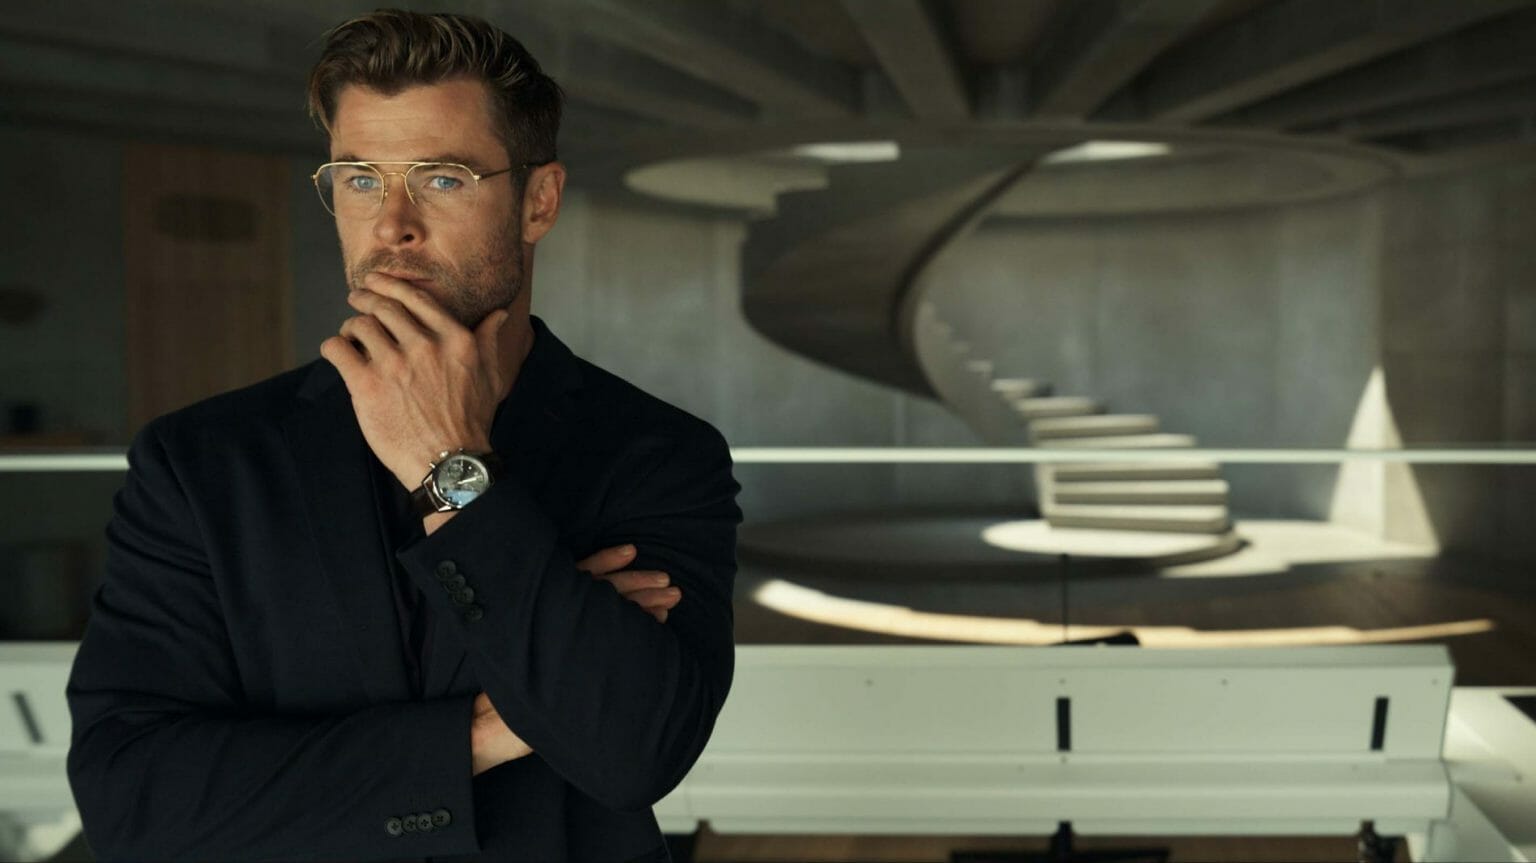 Chris Hemsworth in a black suit as the evil genius Abnesti in SPIDERHEAD on Netflix written by Rhett Reese and Paul Wernick.